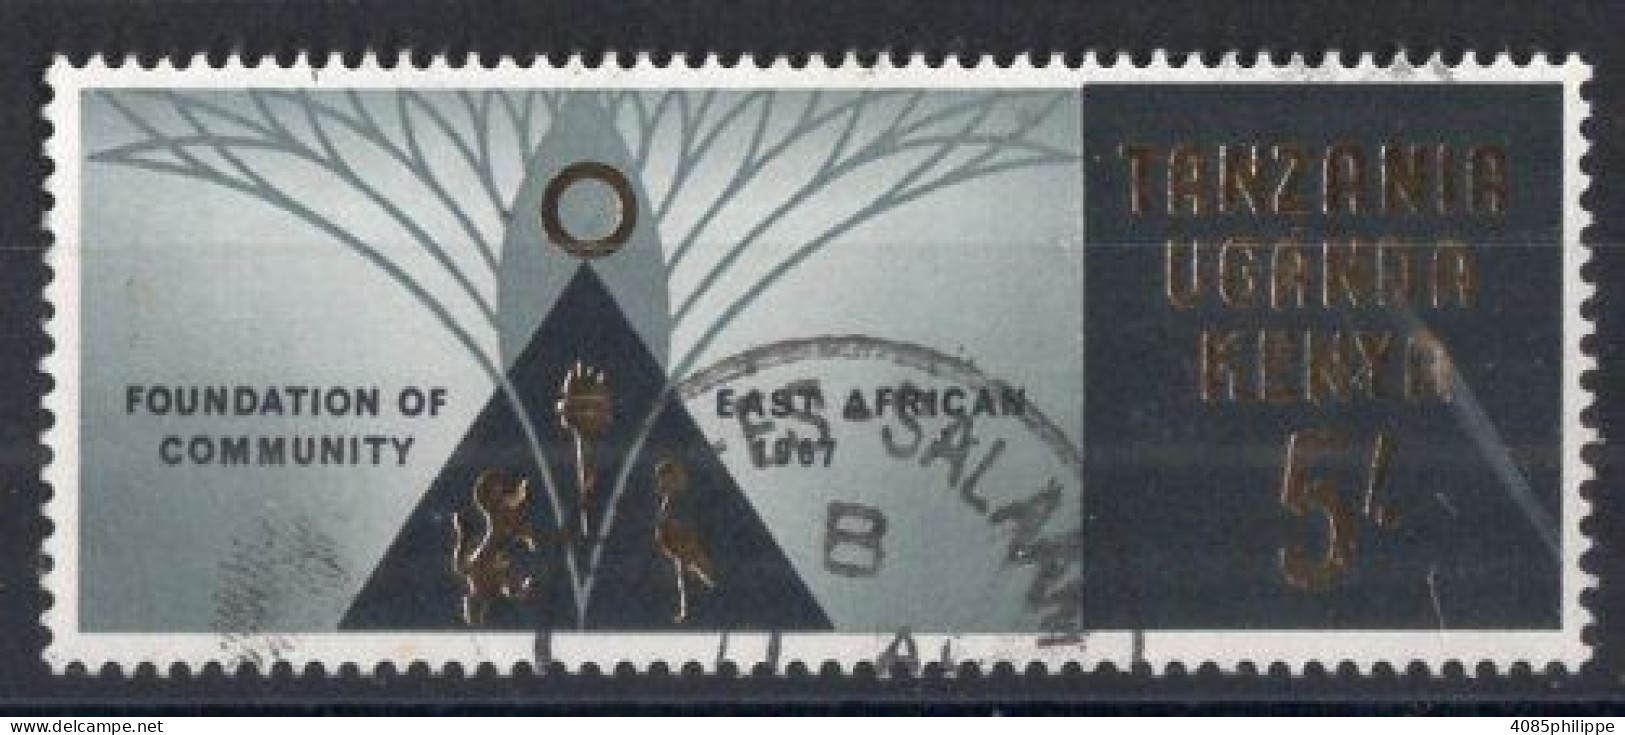 EST-AFRICAIN Timbre-Poste N°165 Oblitéré TB Cote : 1.85€ - Kenya, Uganda & Tanzania